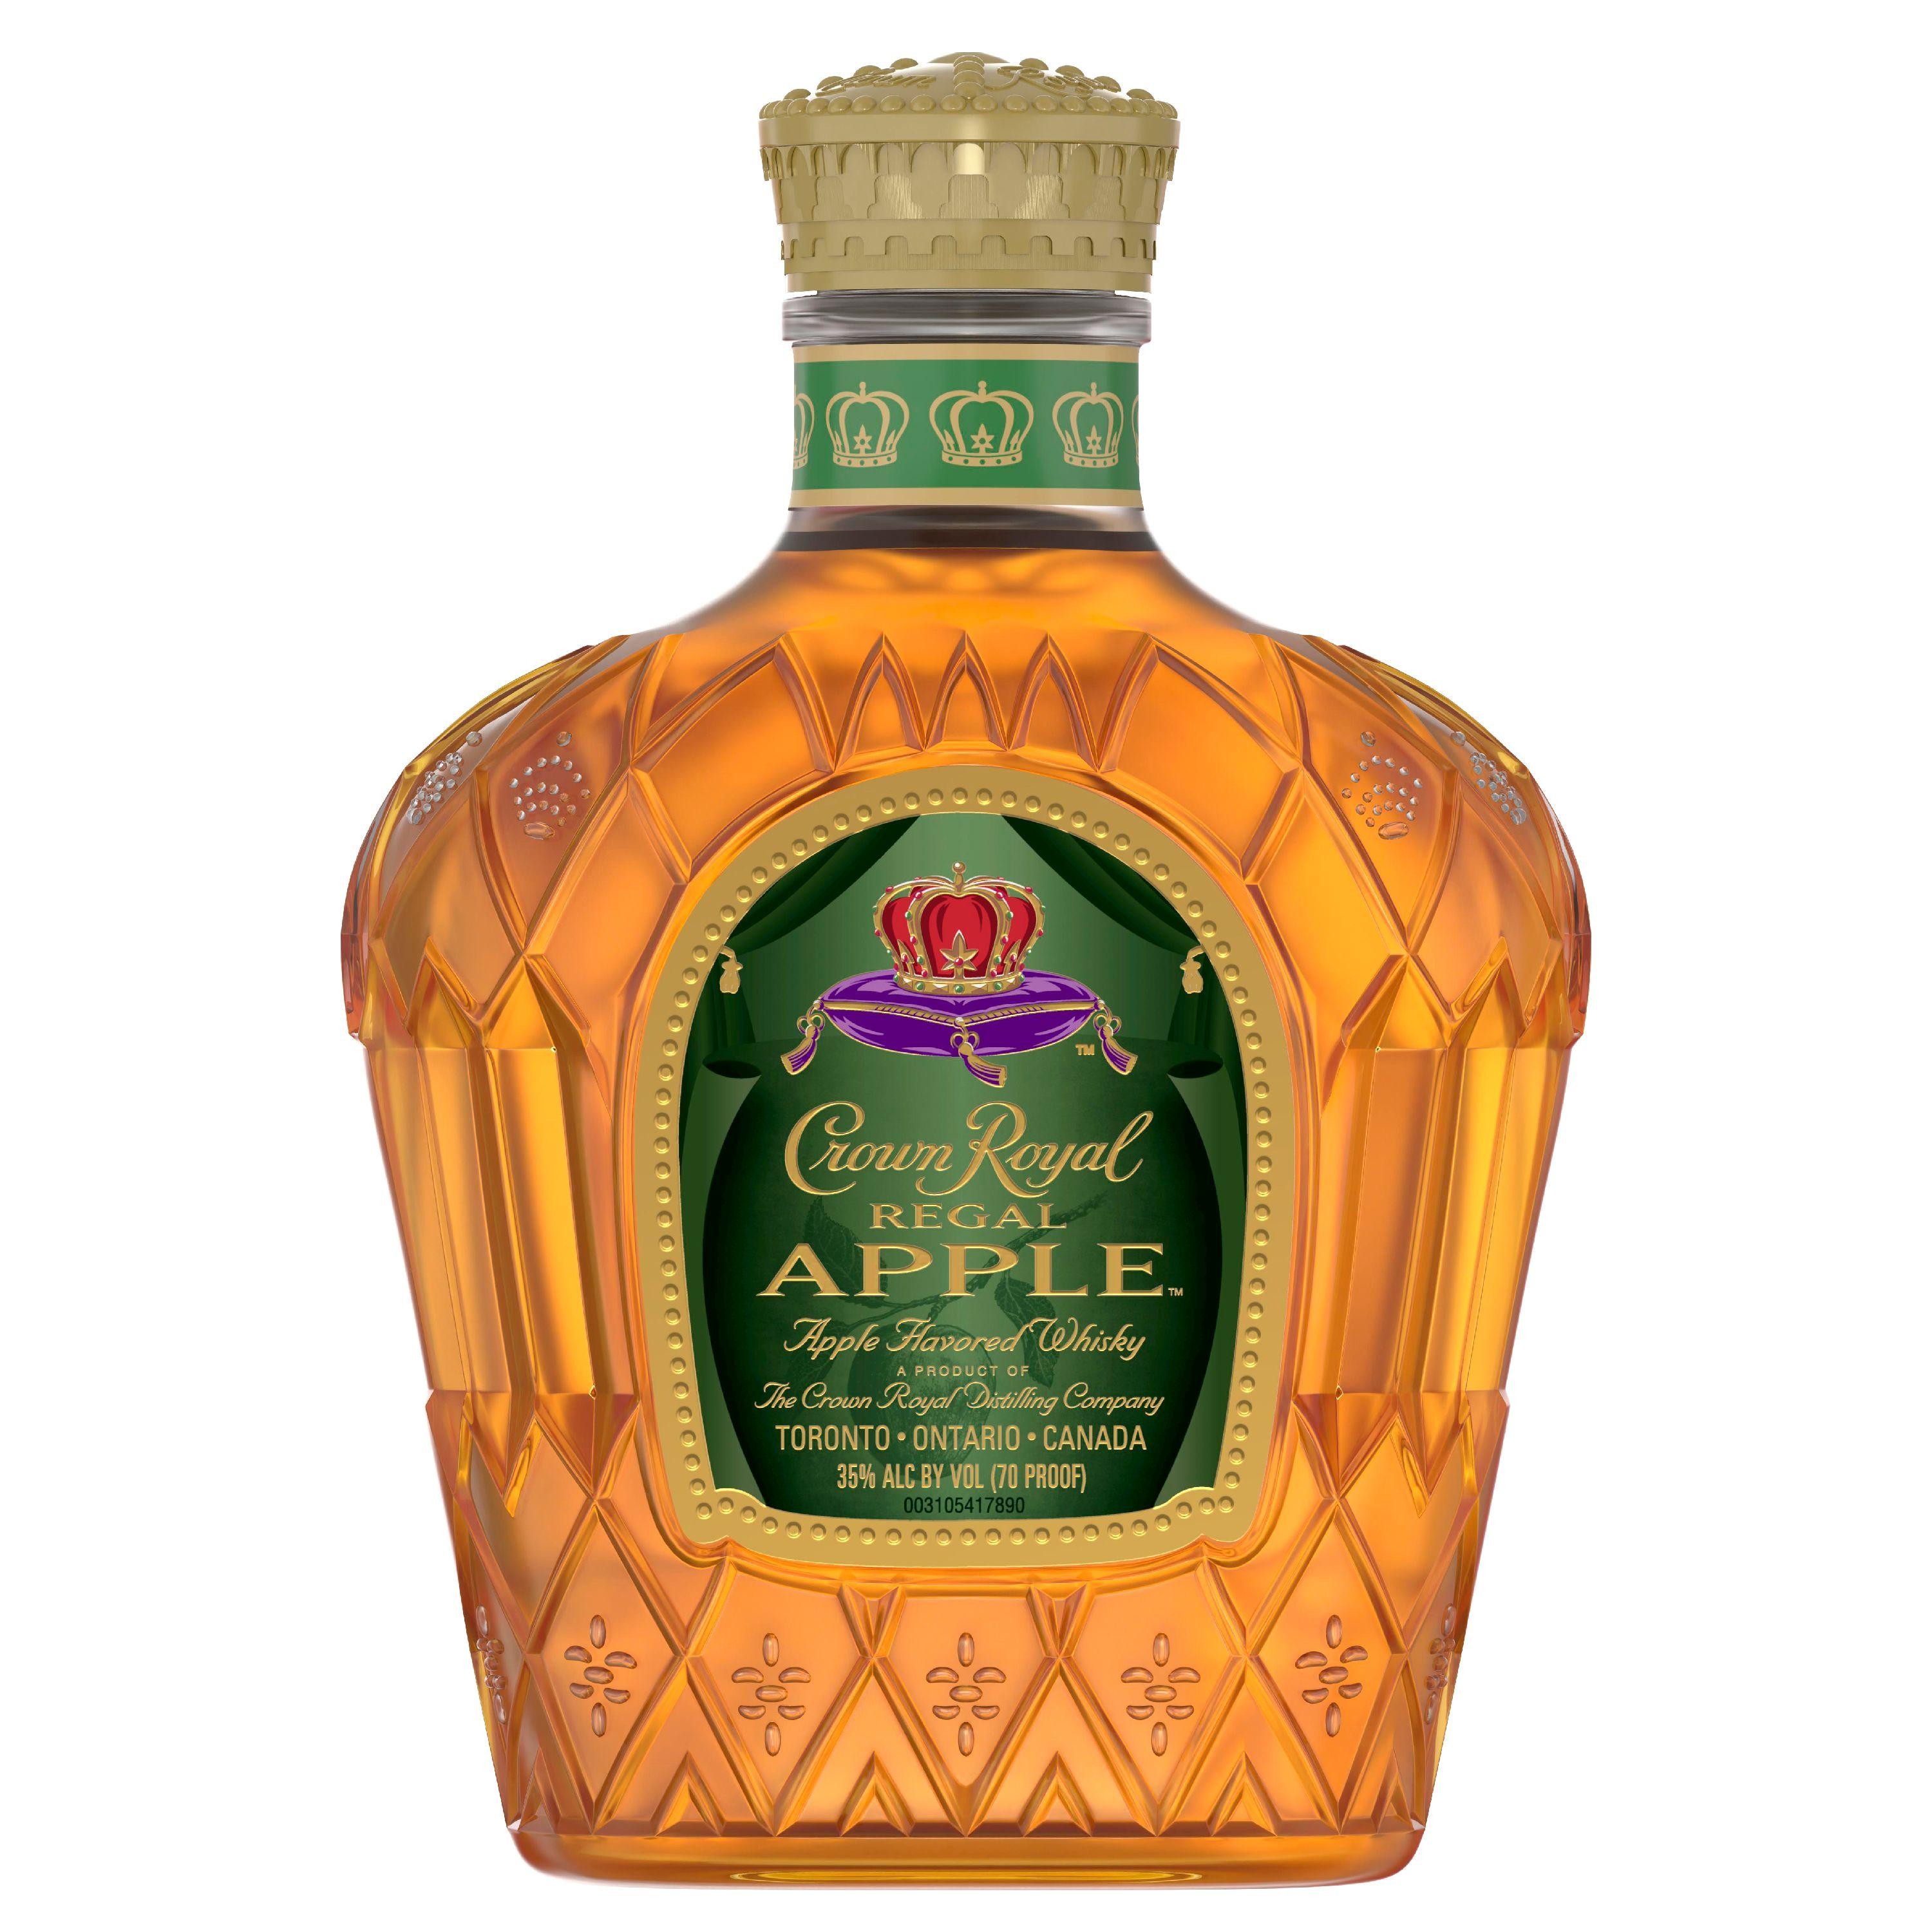 crown royal Apple Flavored Whskey 375ml